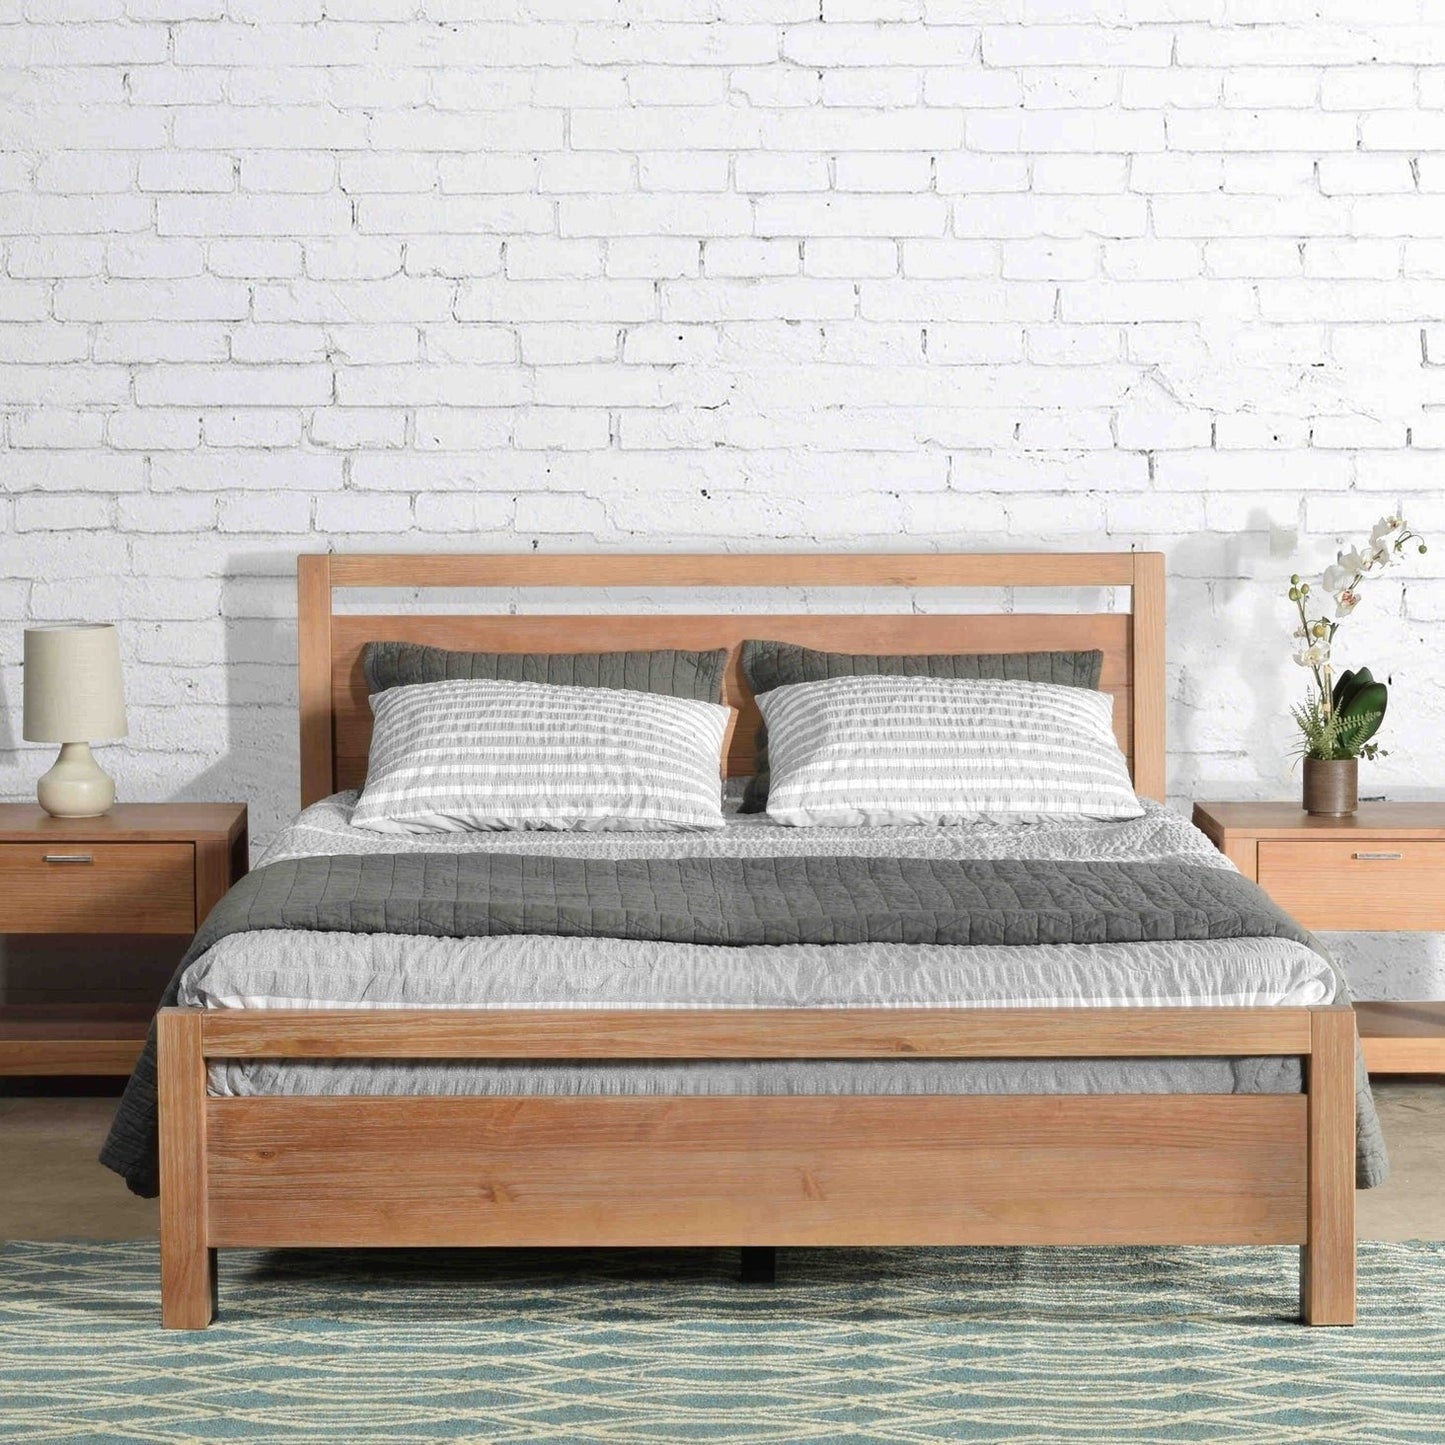 Bedroom > Bed Frames > Platform Beds - Queen Size FarmHouse Traditional Rustic Acacia Platform Bed